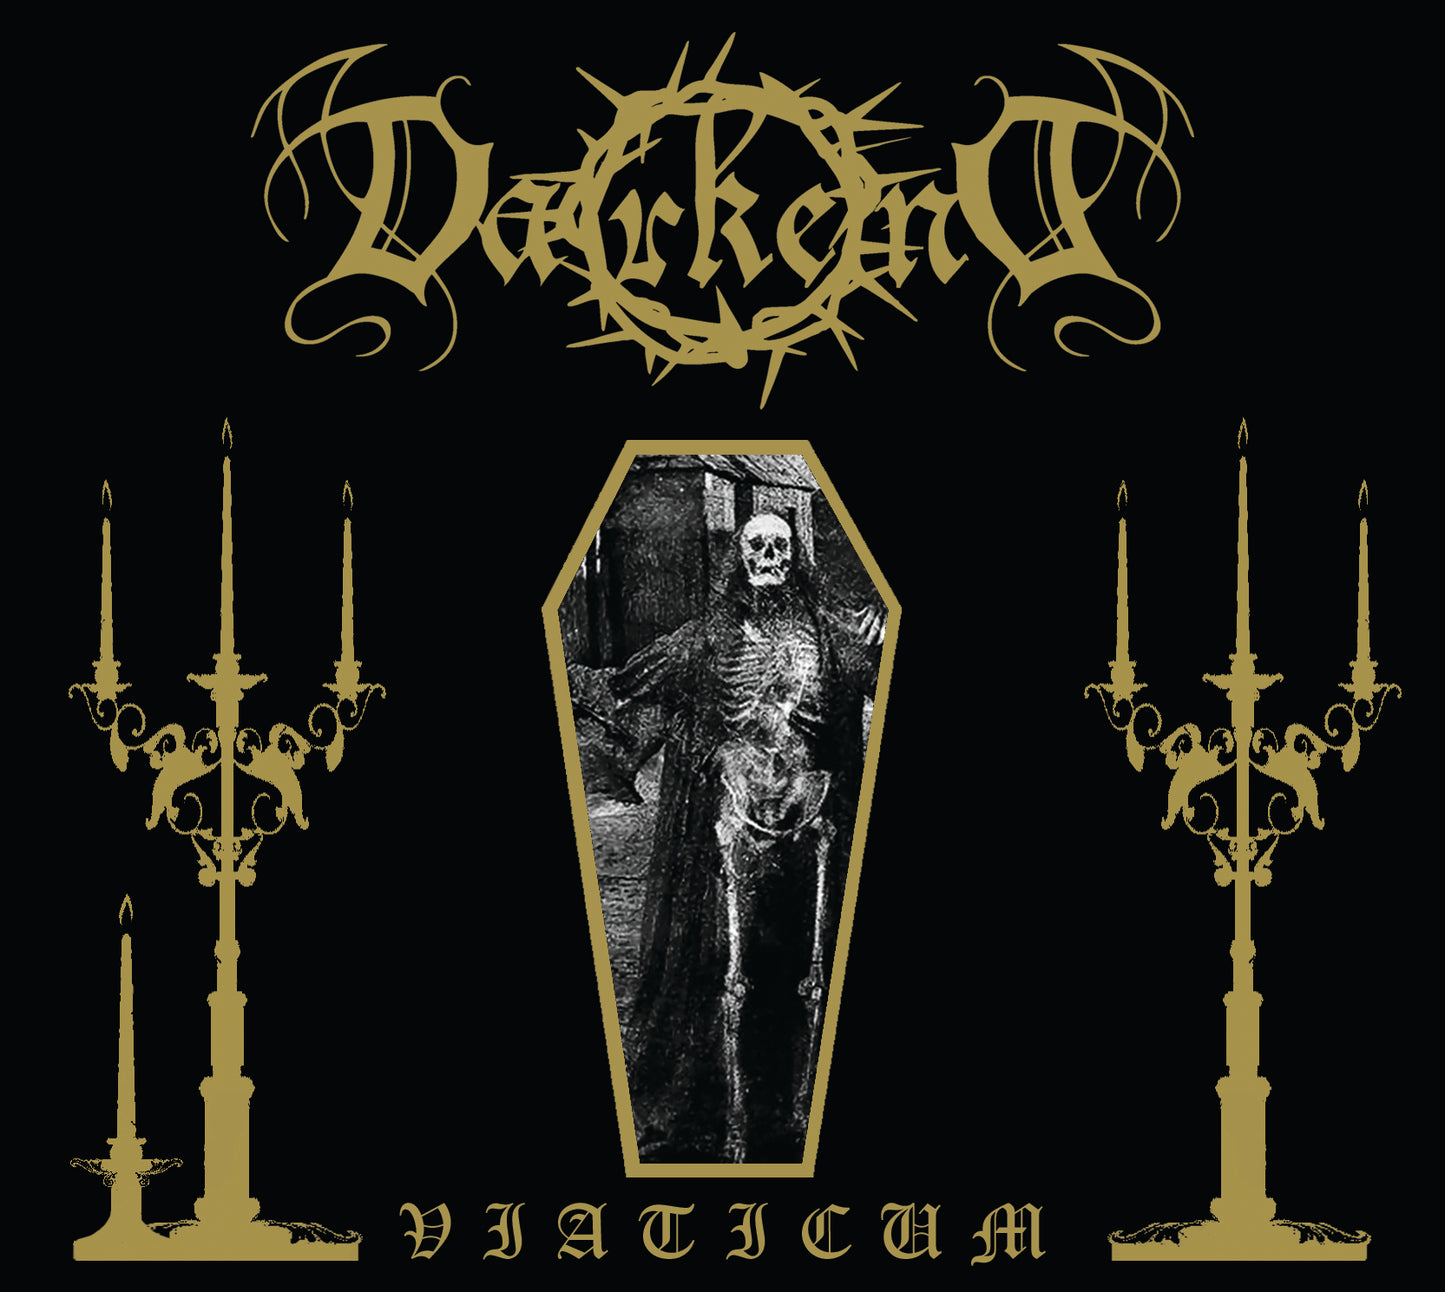 Darkend "Viaticum" digital album